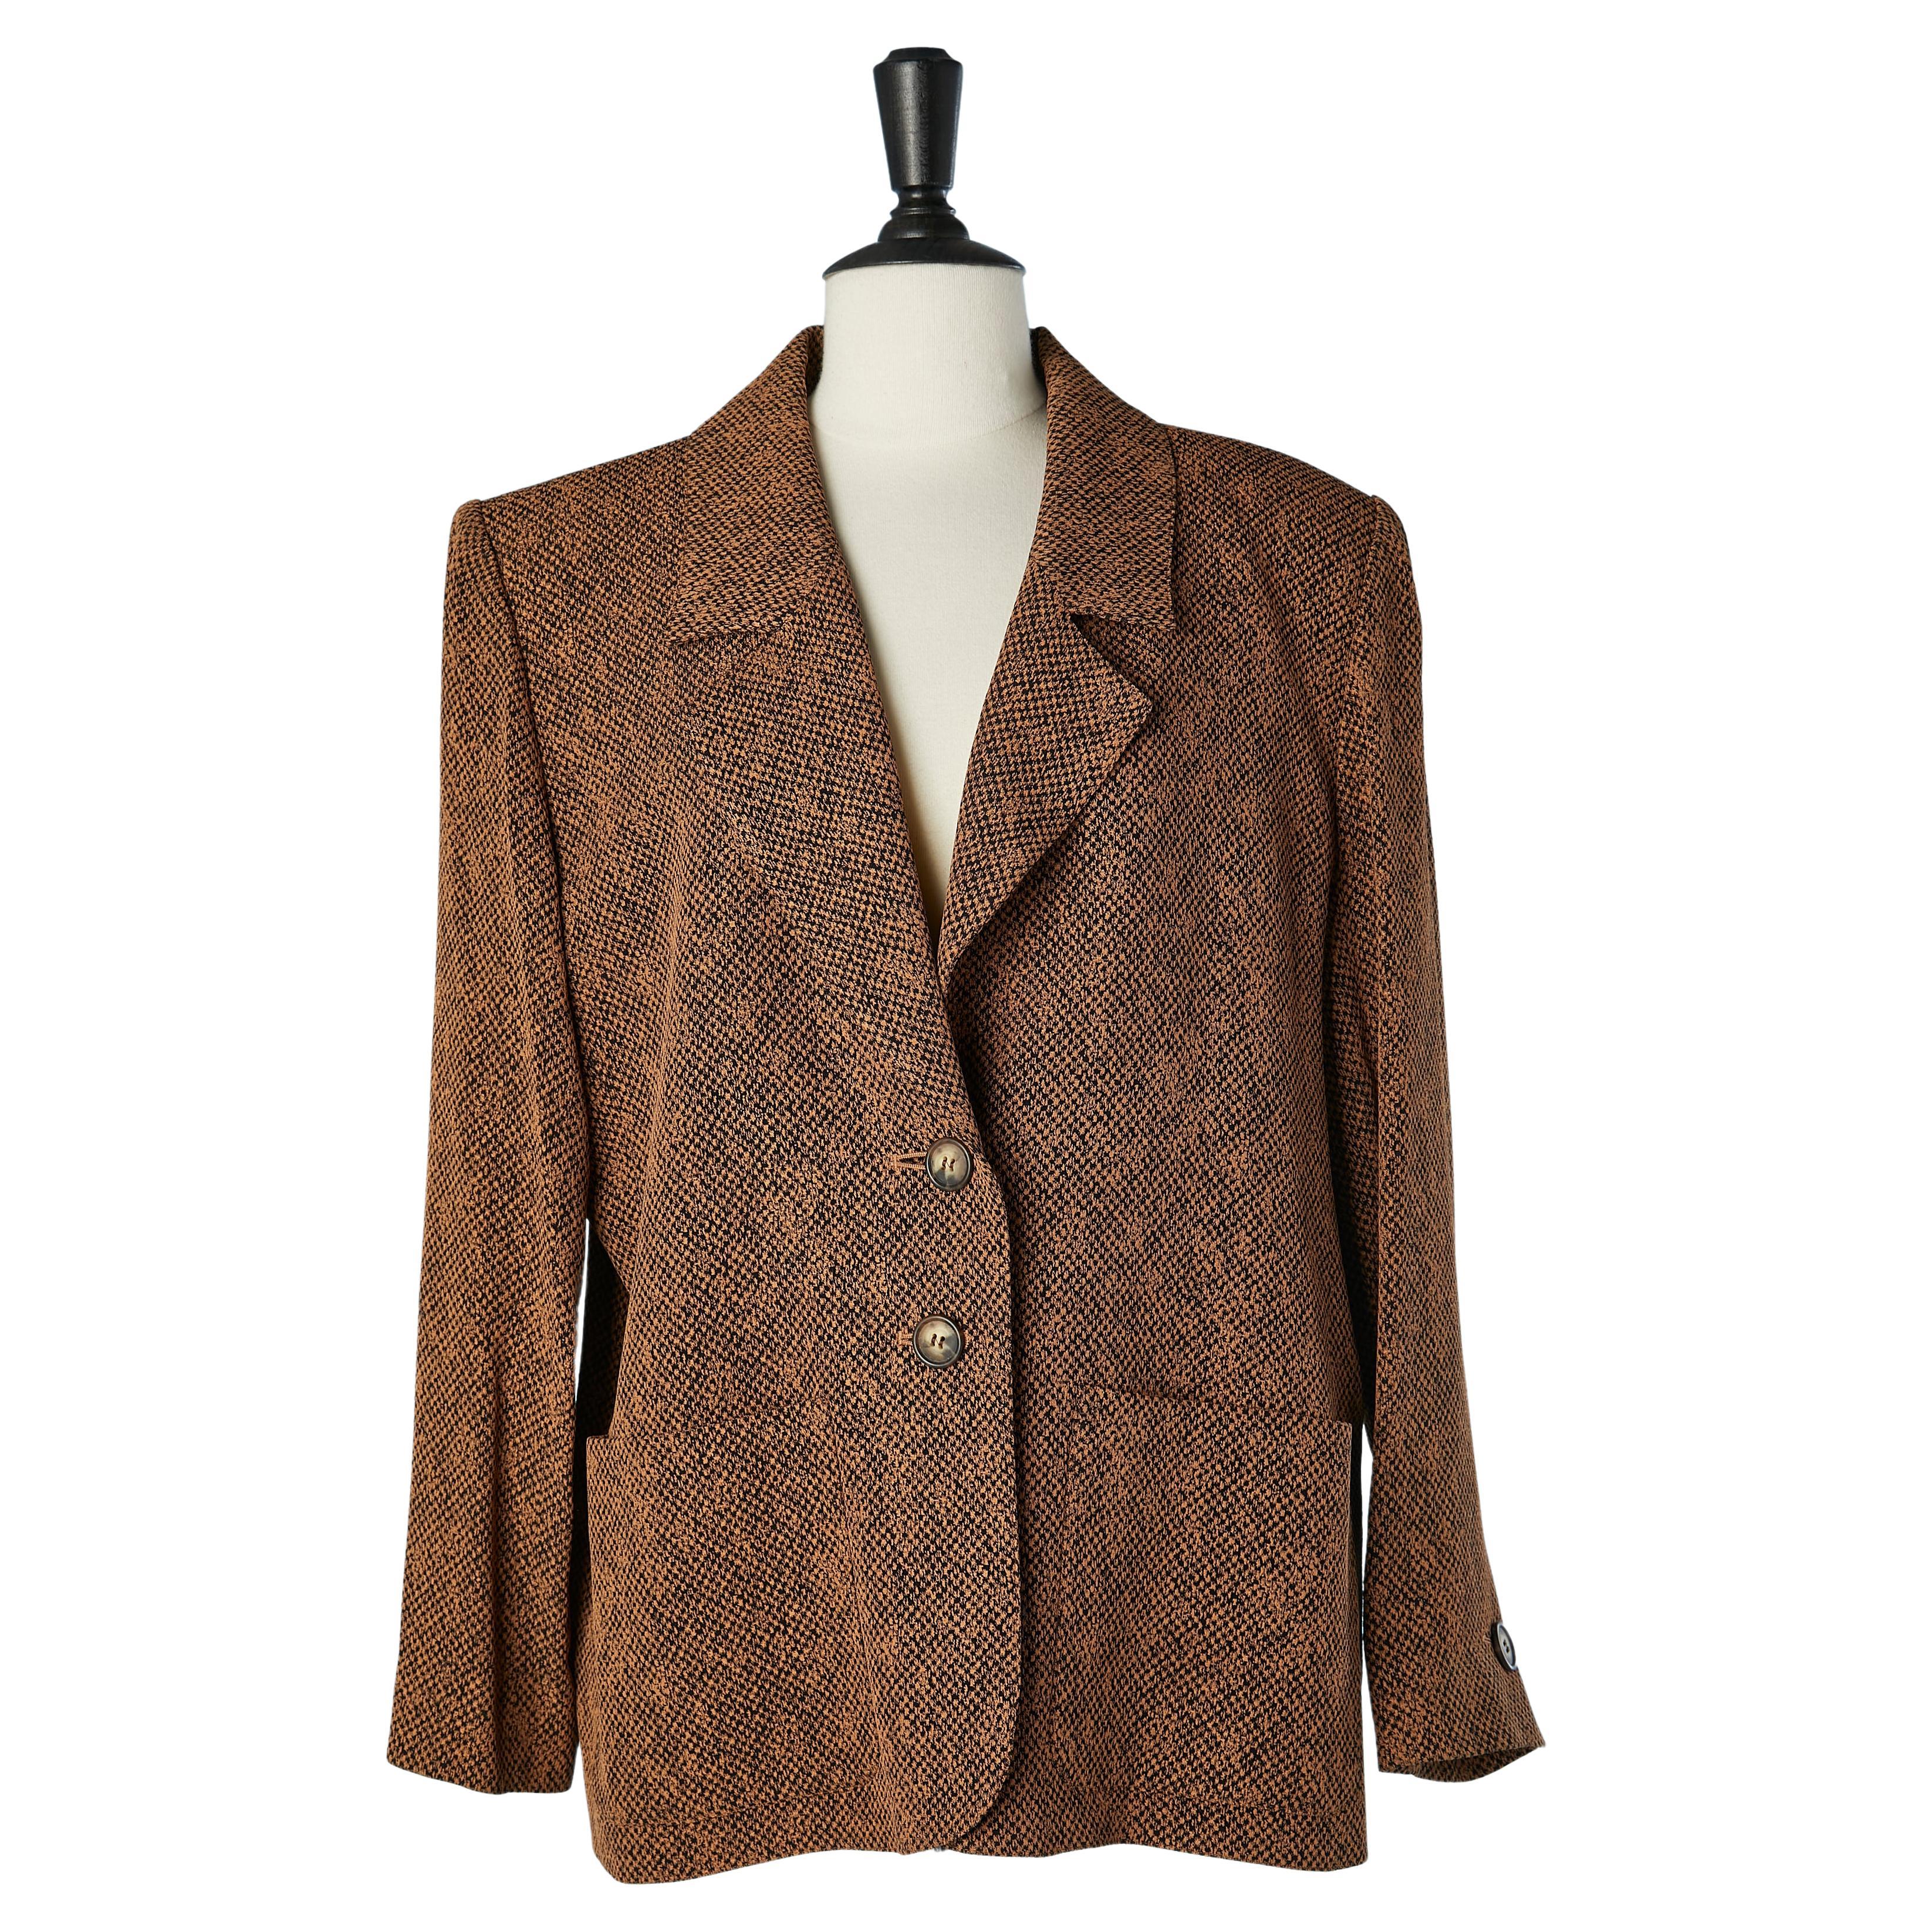 Brown and black jacquard single breasted jacket Yves Saint Laurent Variation  For Sale